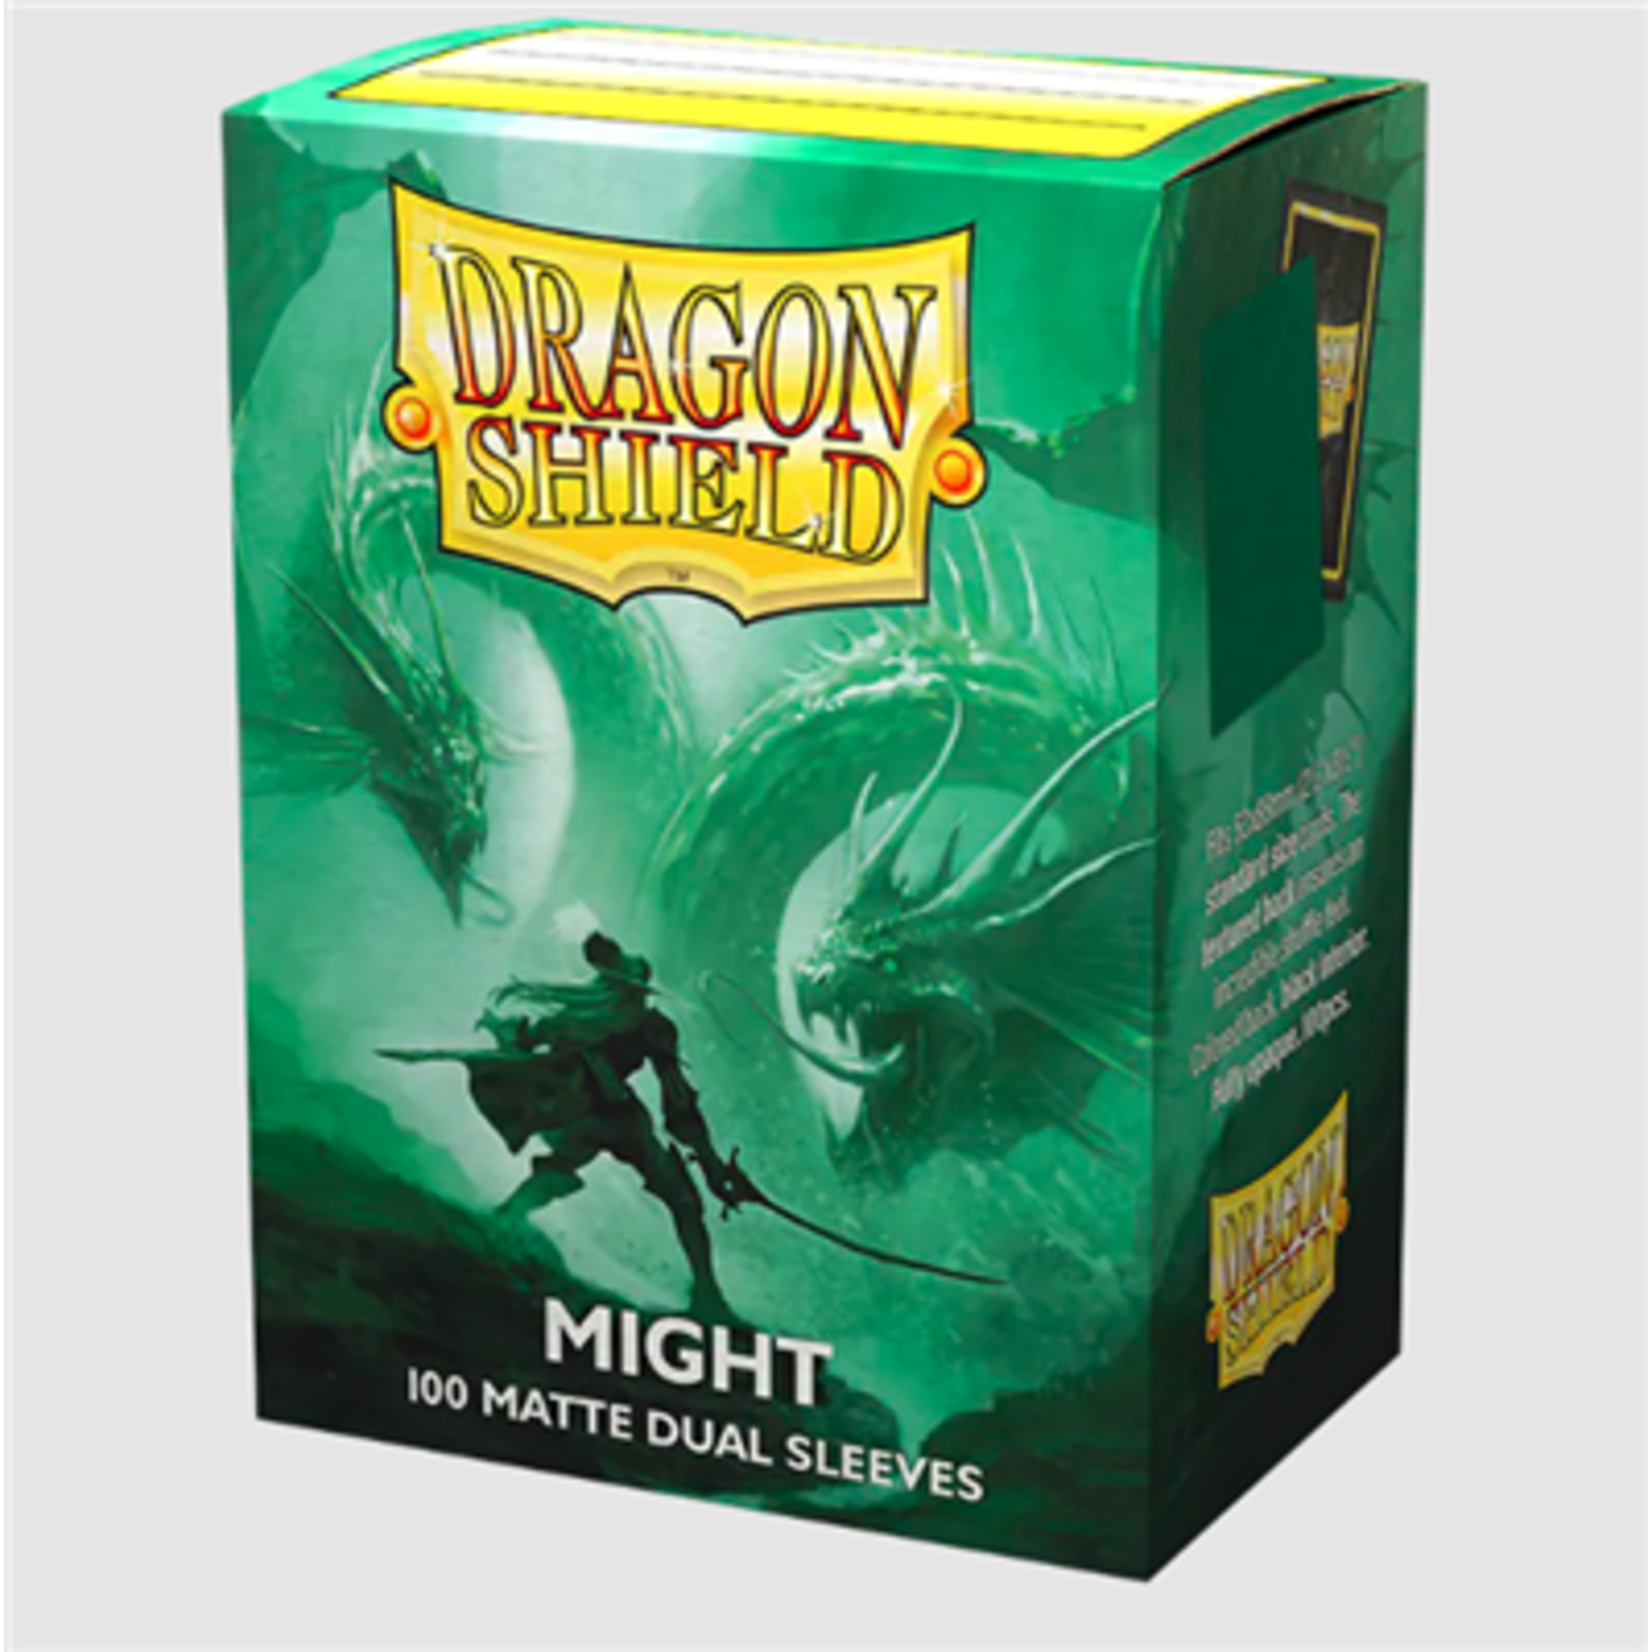 Dragonshield Dragonshield Box 100 Dual Matte Sleeves  'Might'